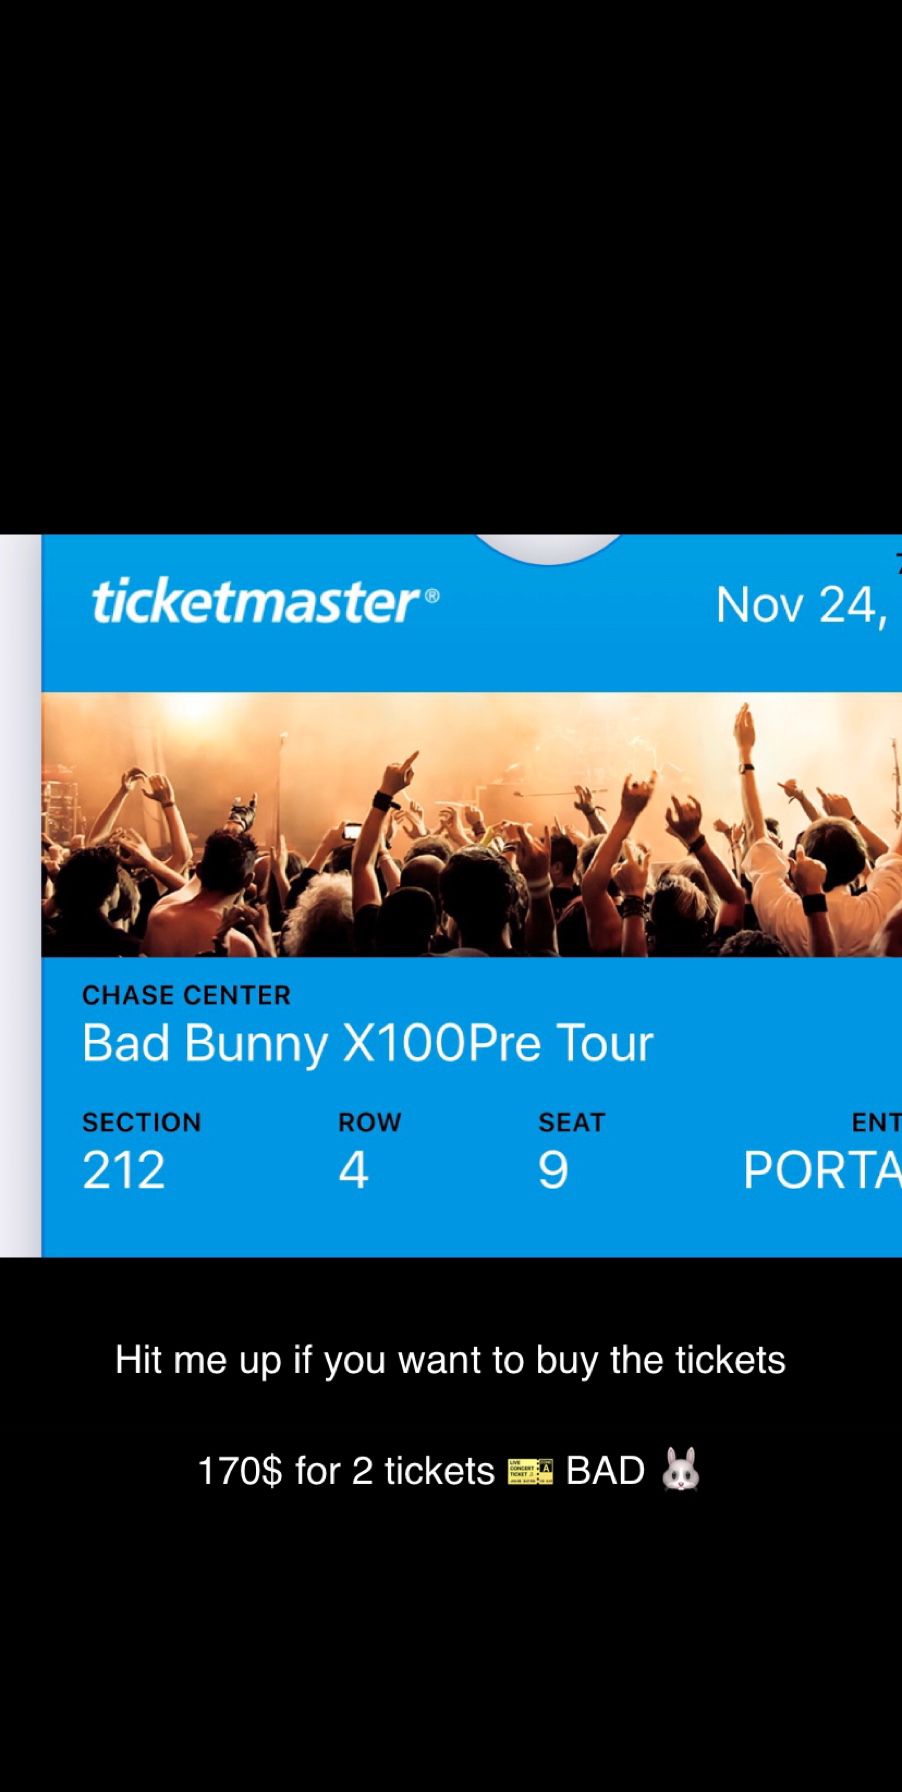 Bad bunny tickets